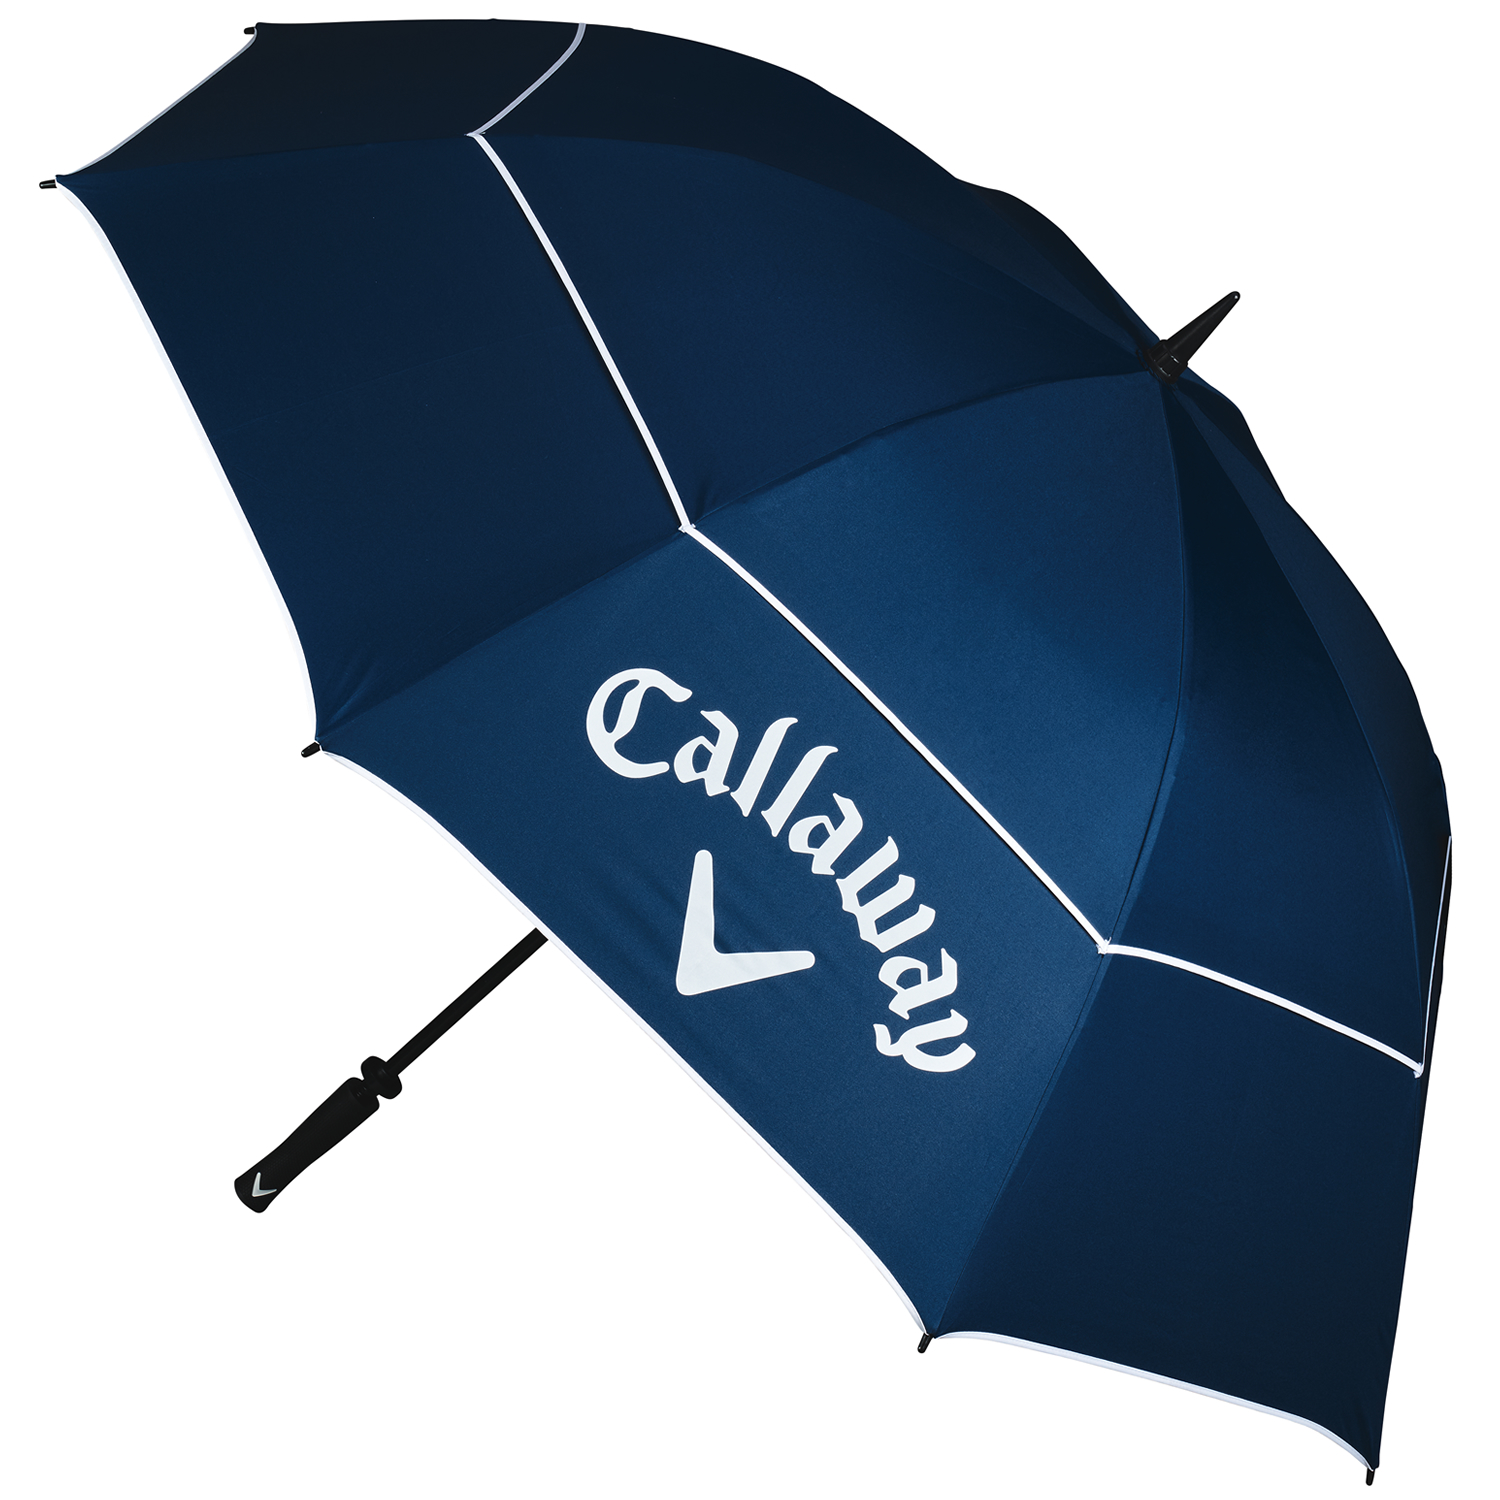 Callaway Shield 64 Inch Double Canopy Golf Umbrella